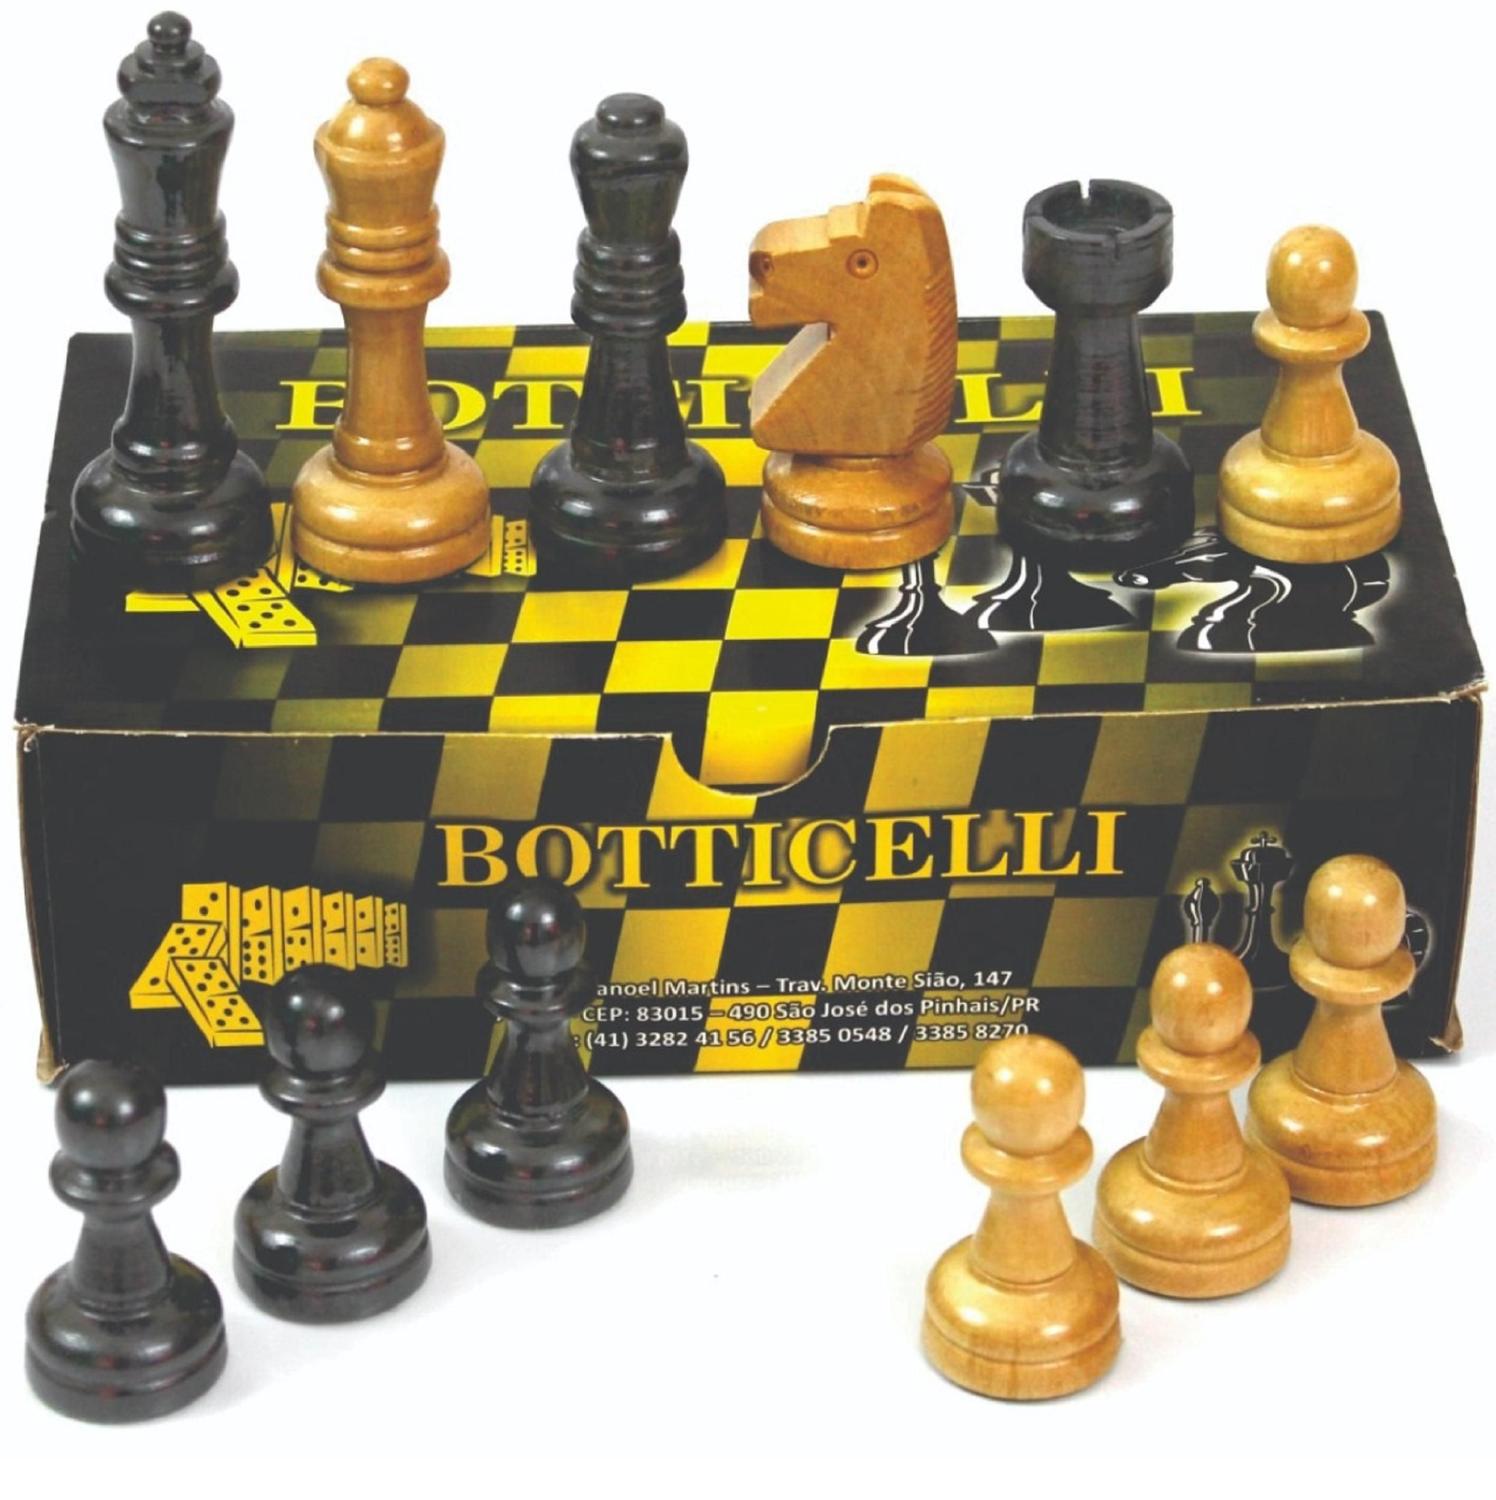 Pecas de xadrez cod 2183  Compre Produtos Personalizados no Elo7